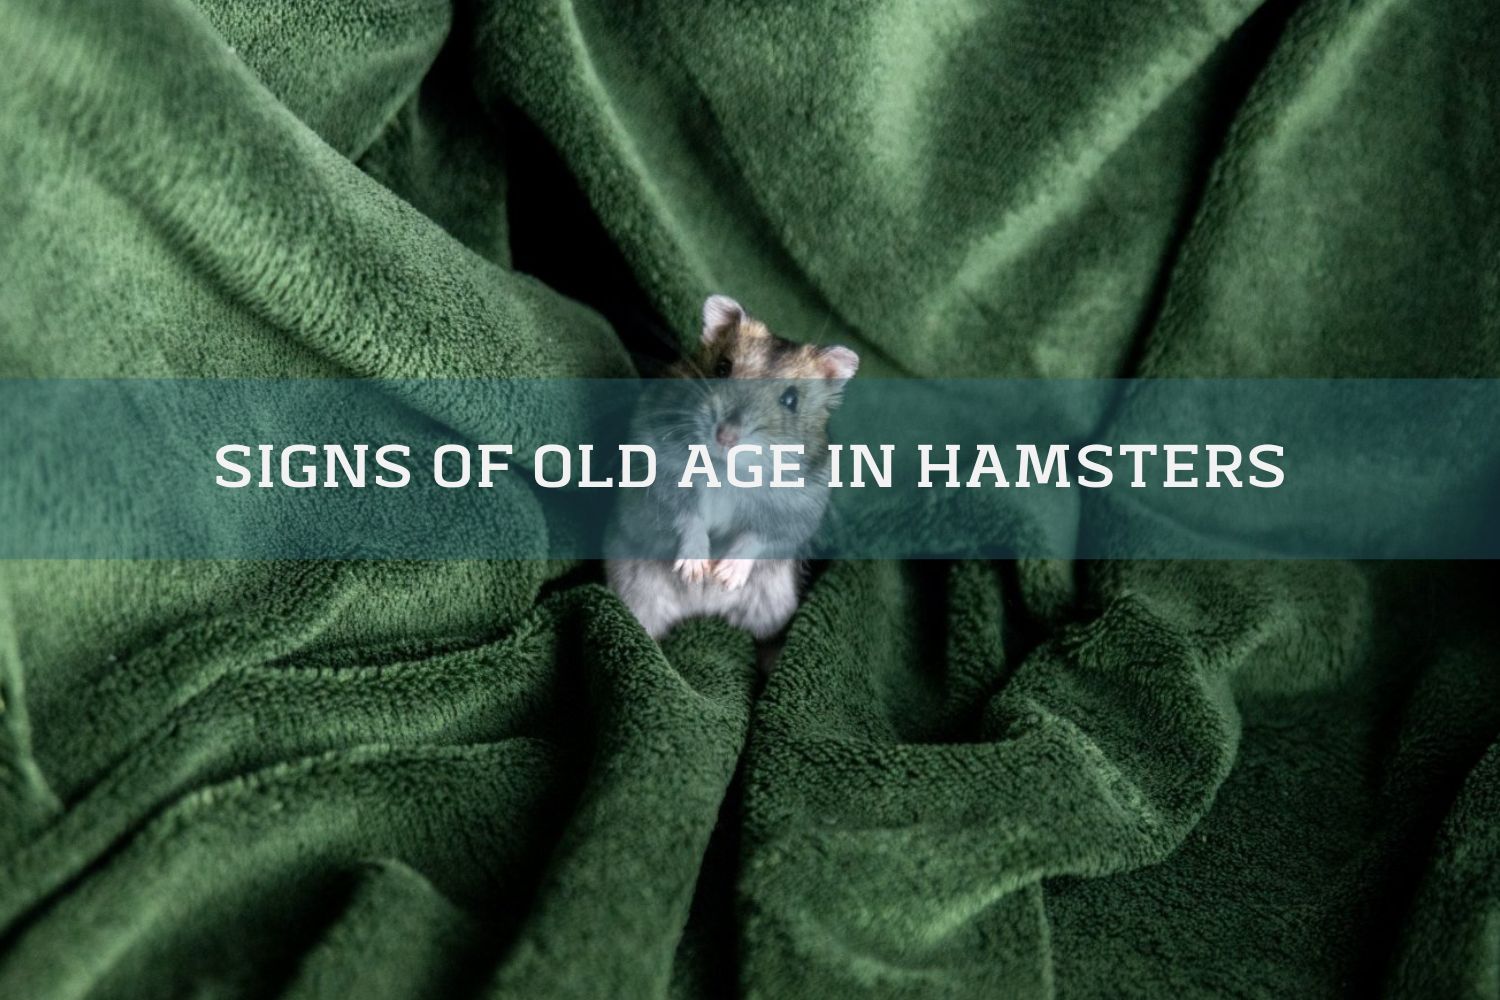 hamster on a green blanket